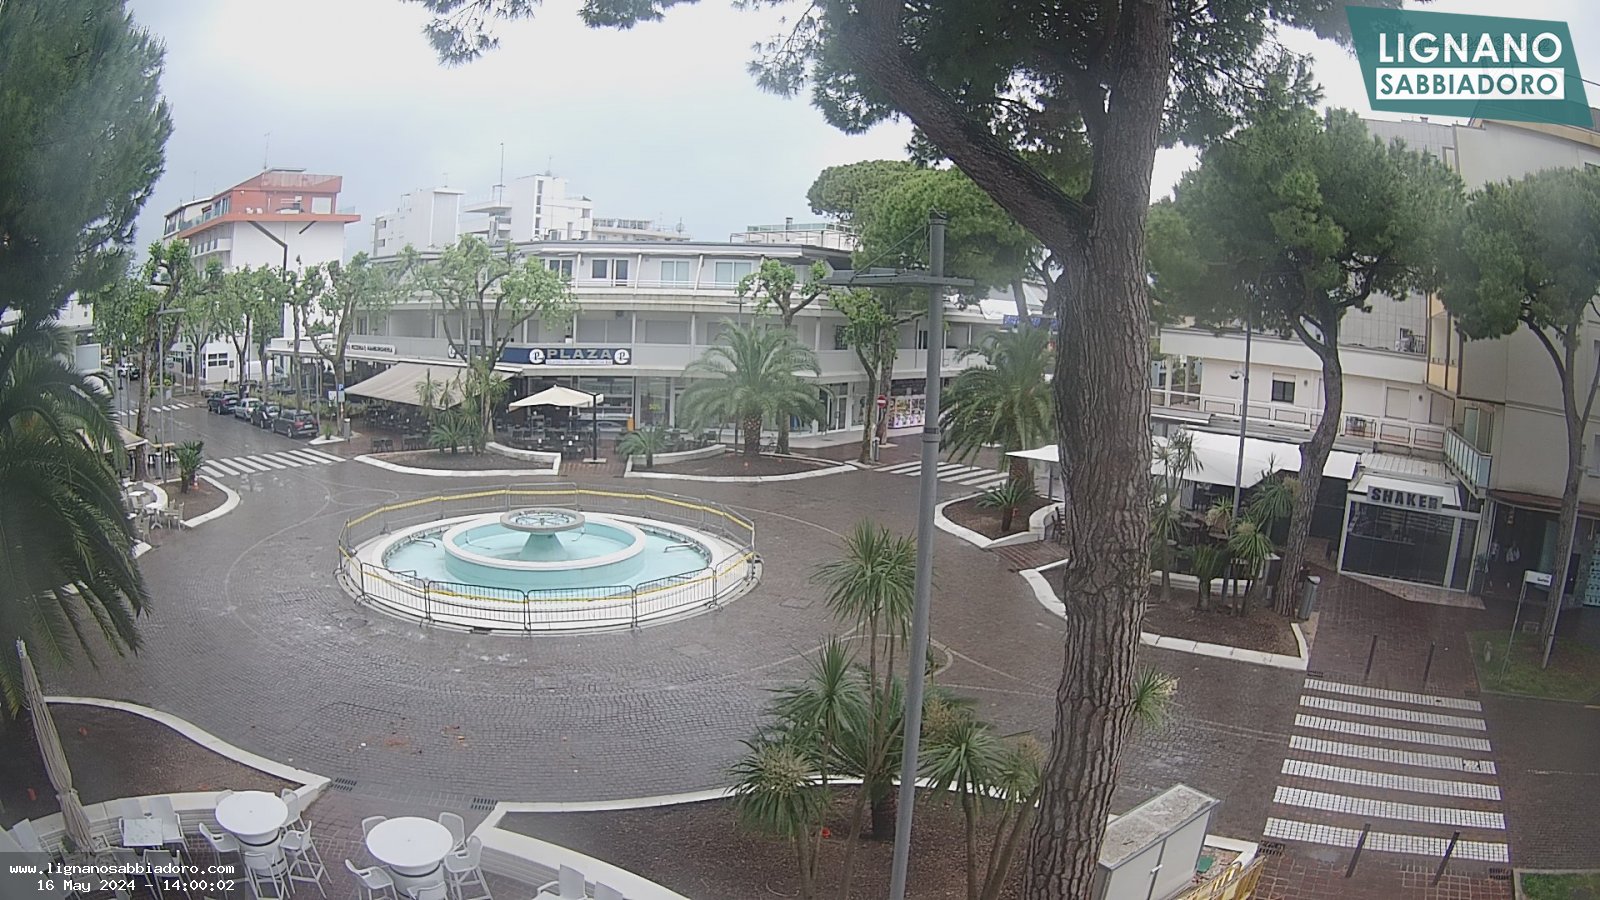 Webcam Piazza Fontana